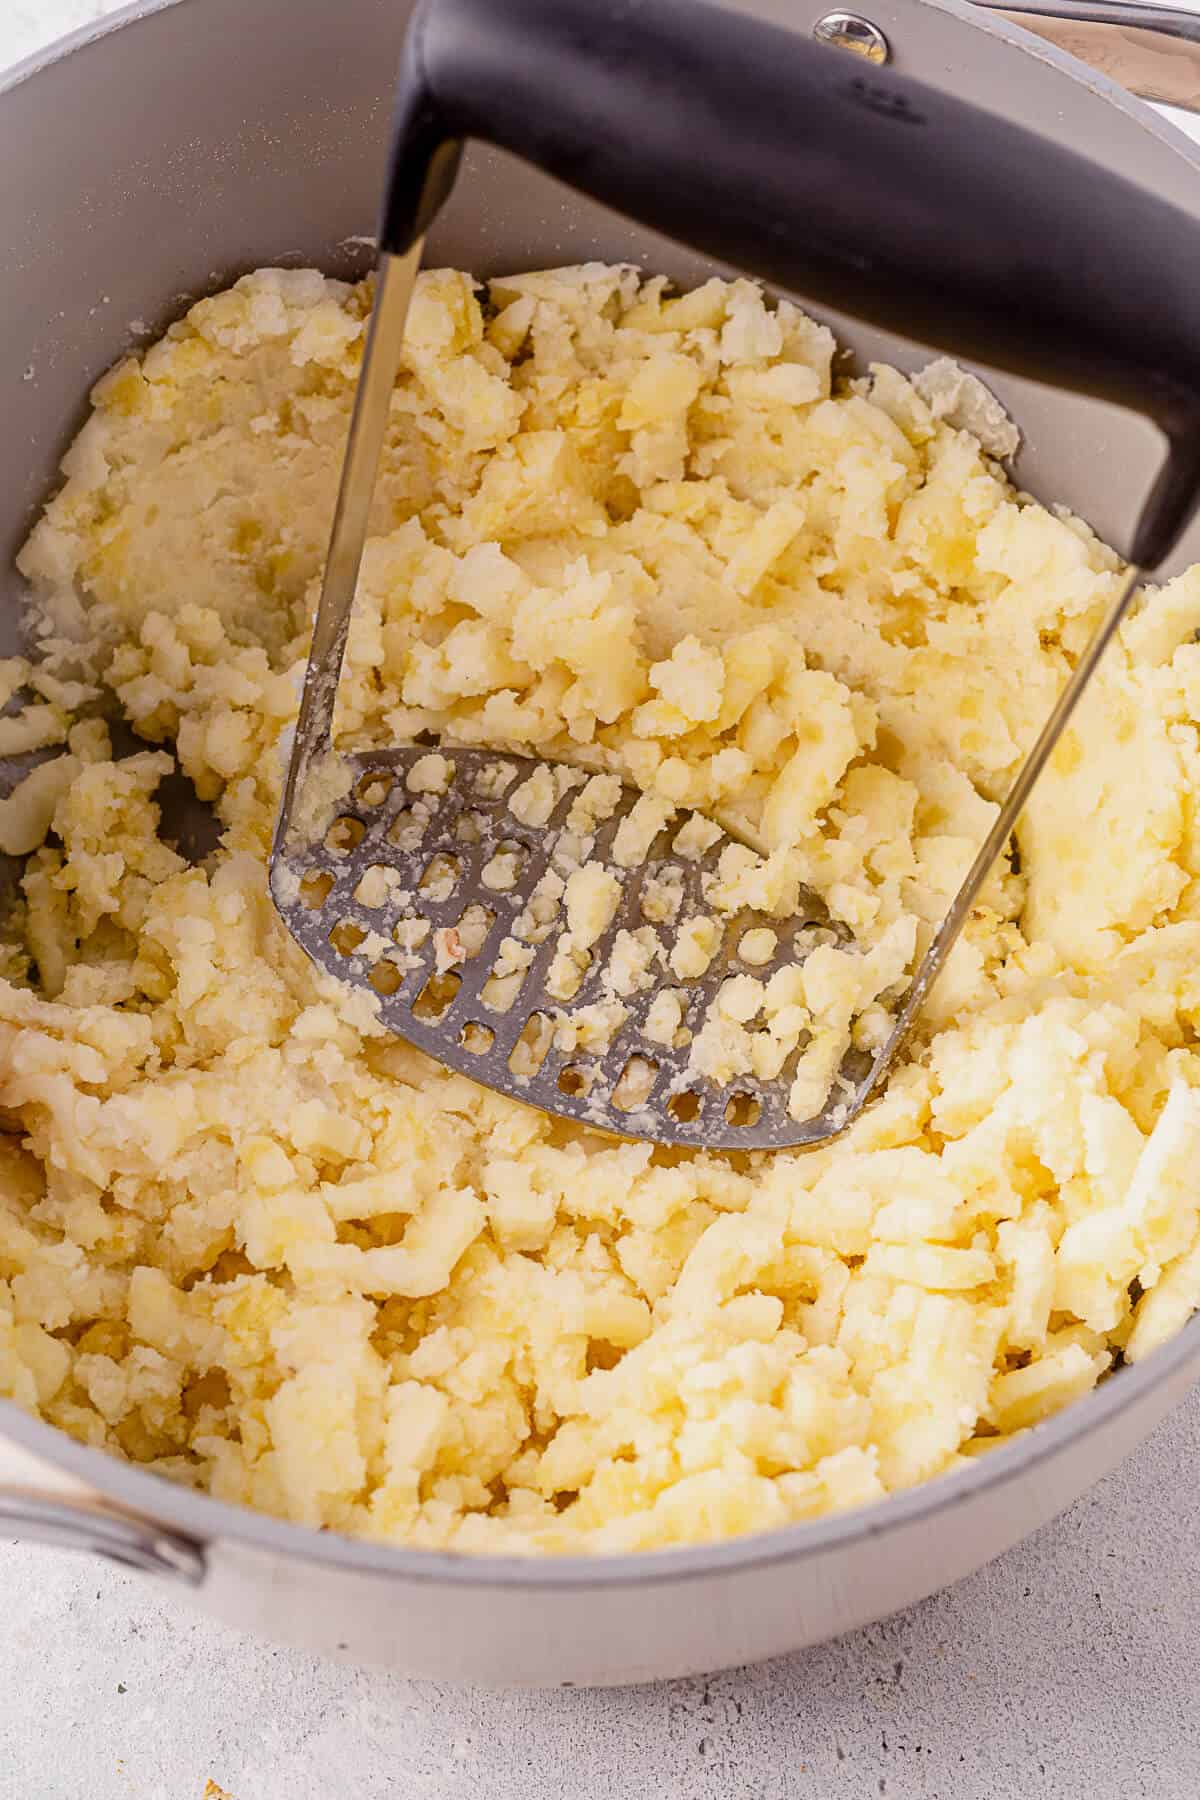 mashing potatoes with a masher